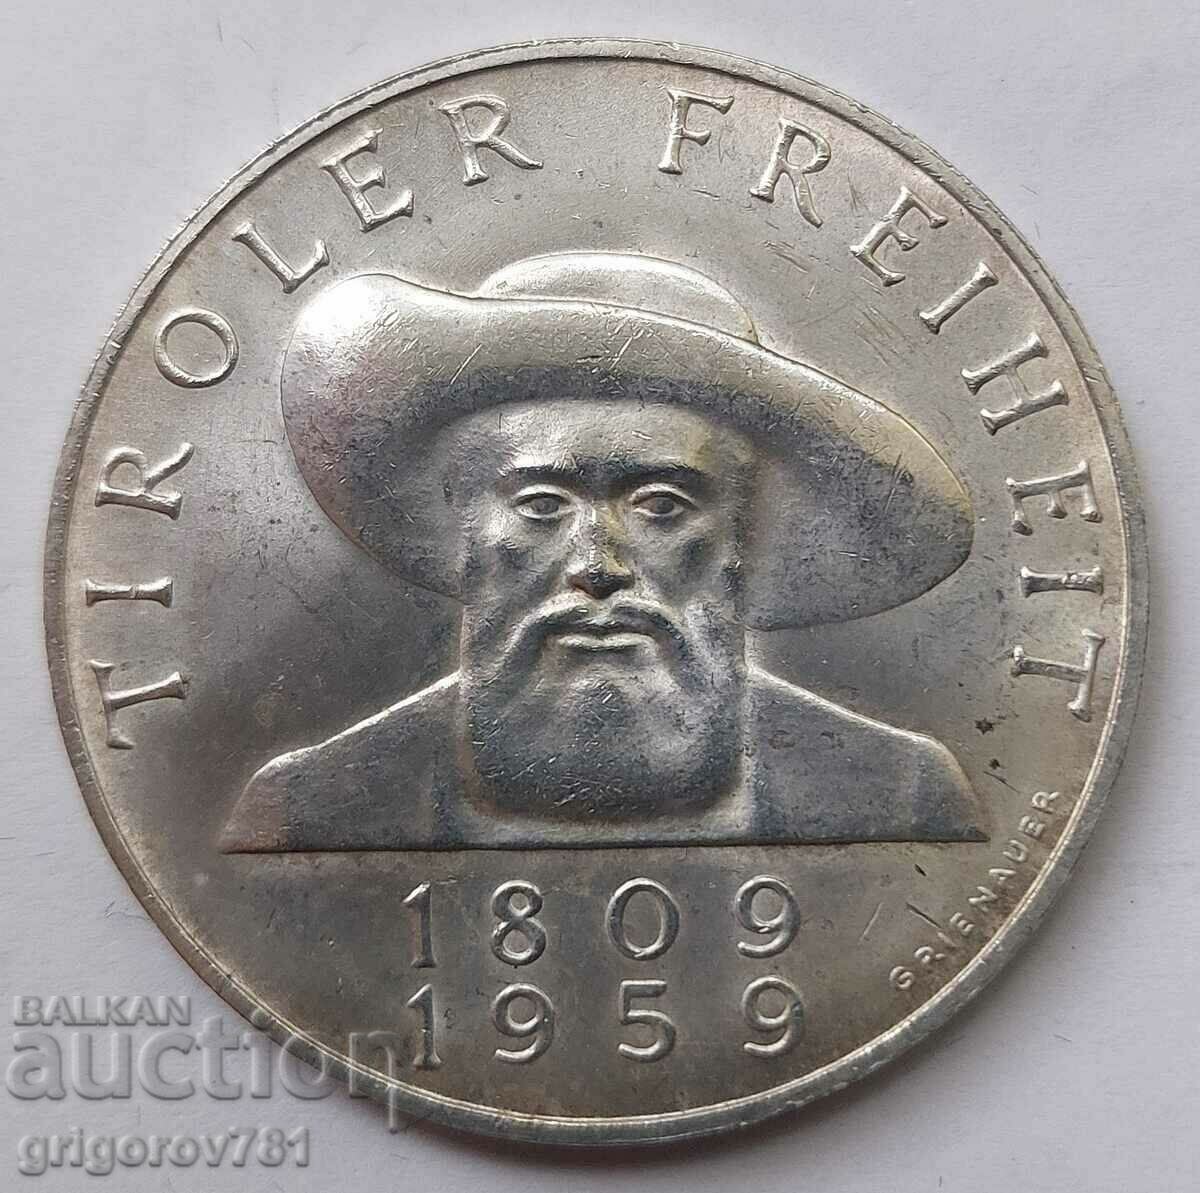 50 Shillings Silver Austria 1959 - Silver Coin #15